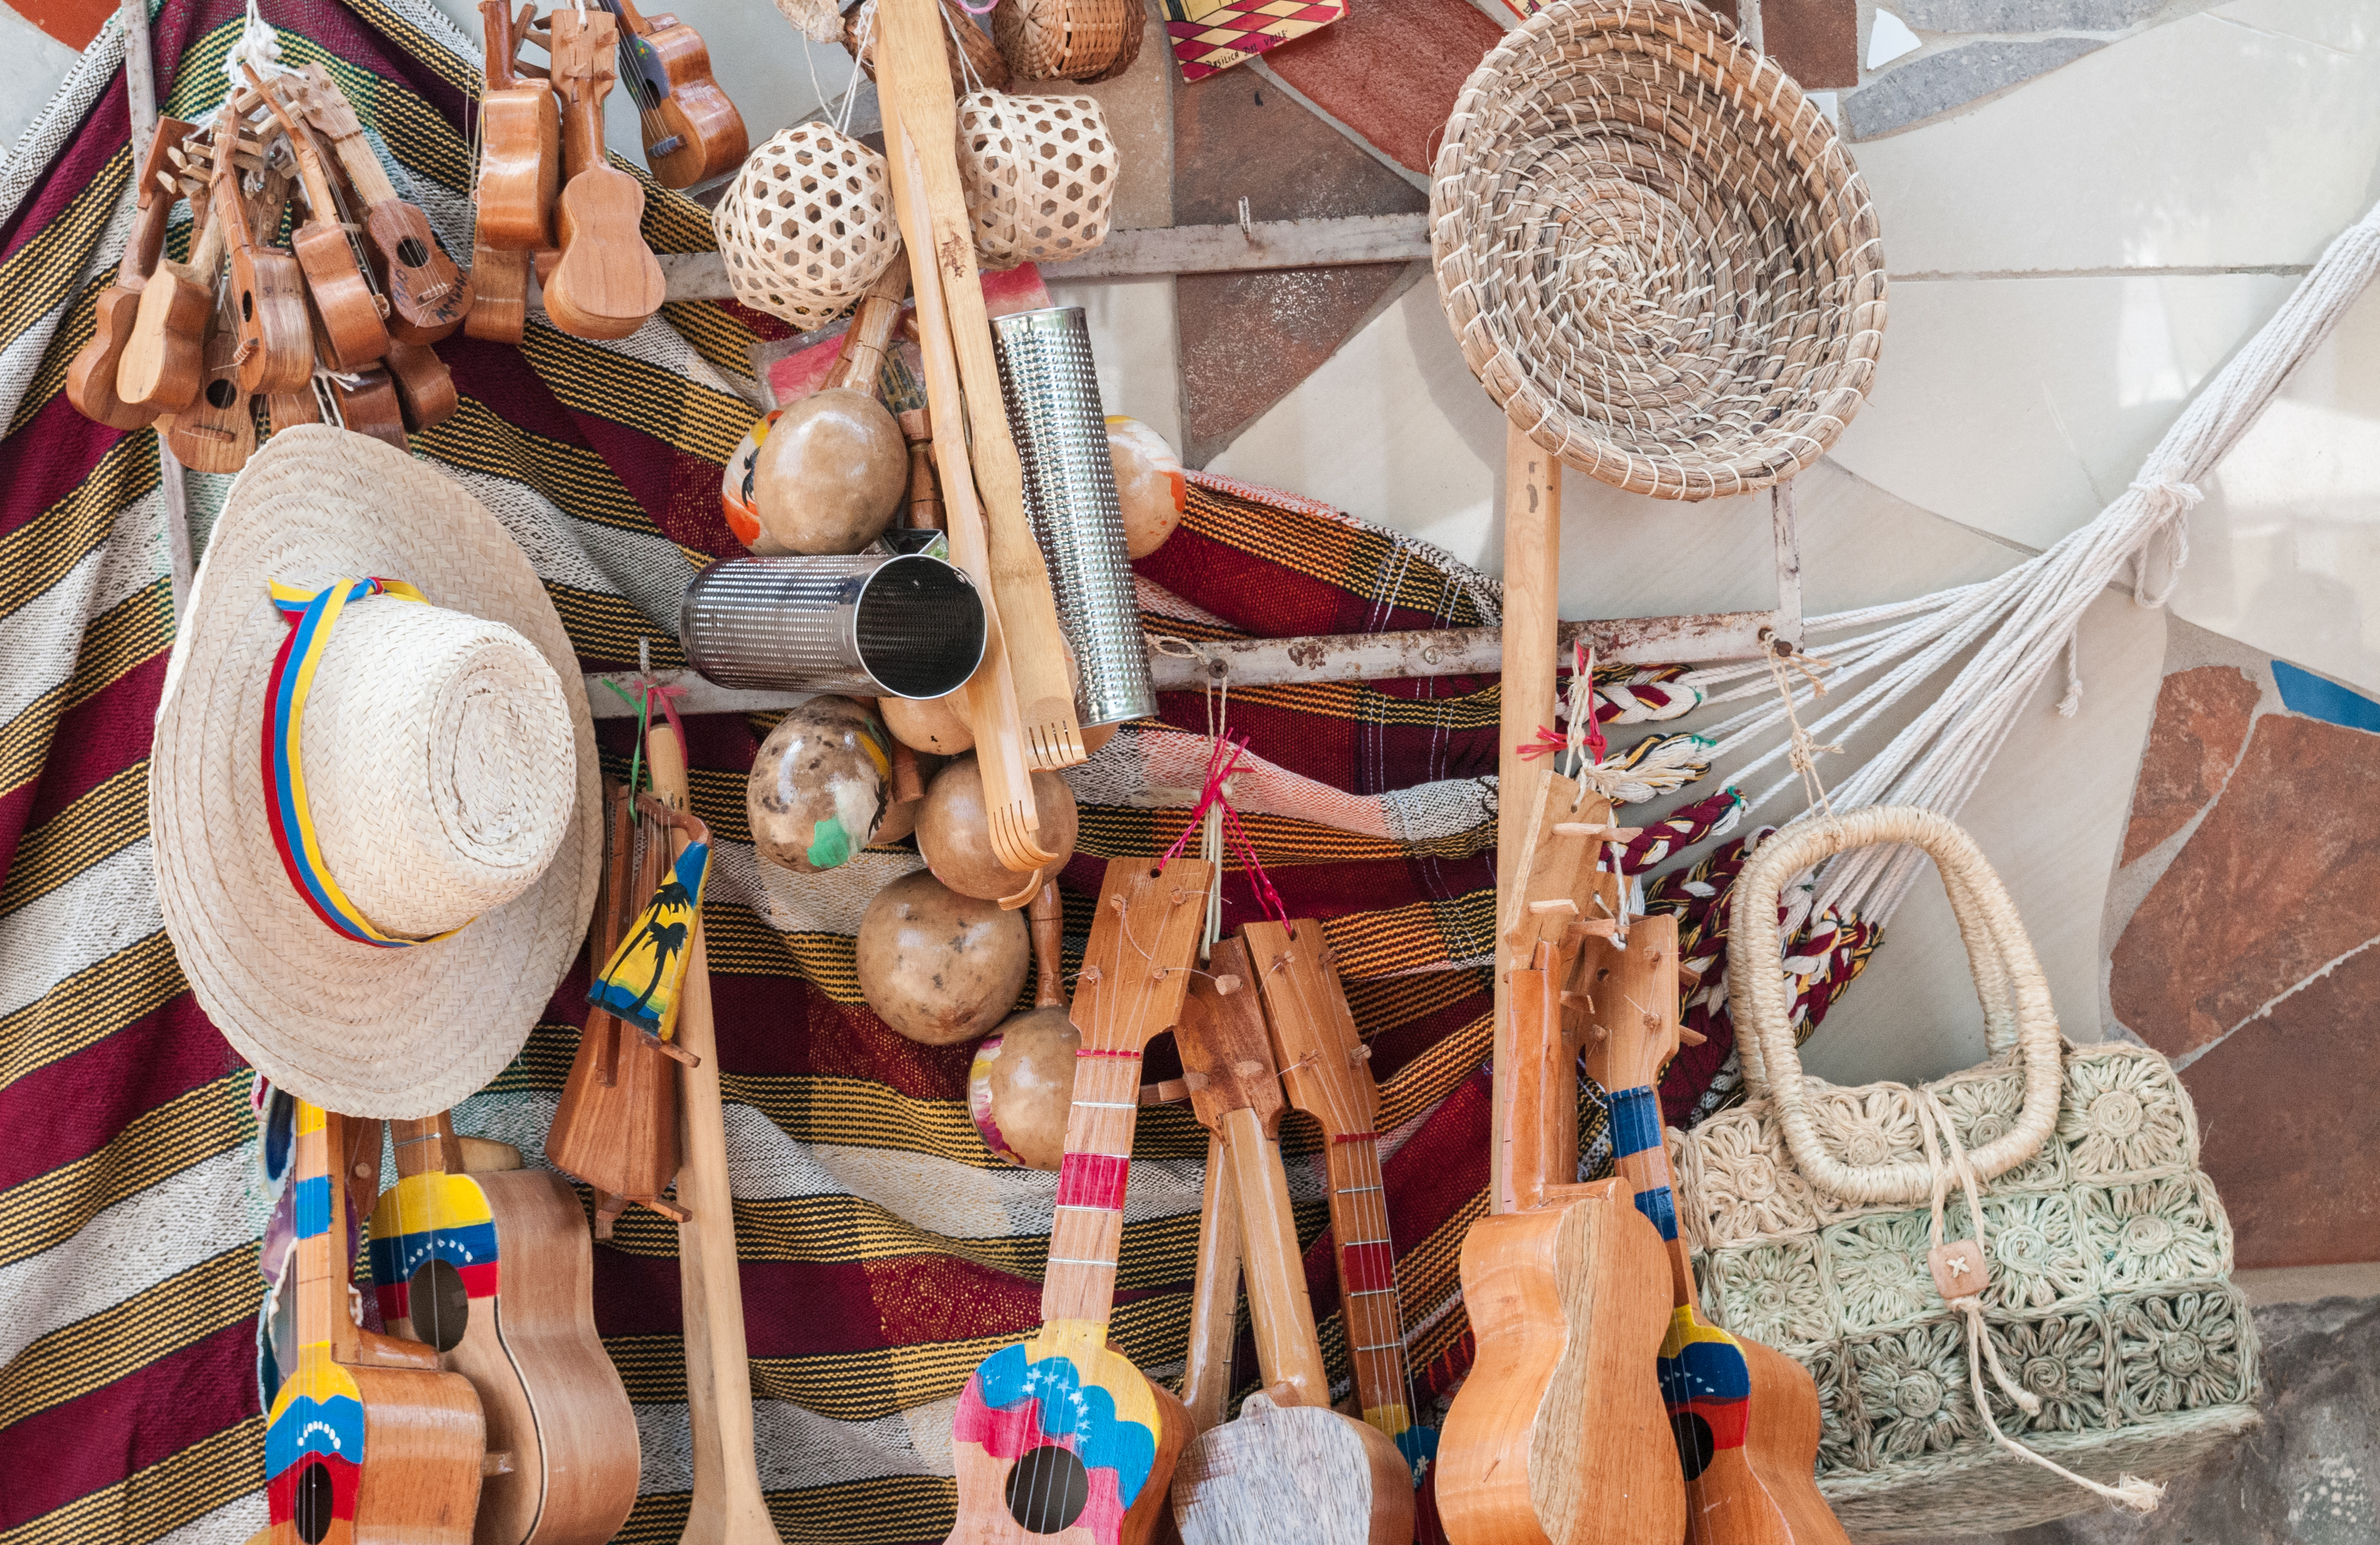 Handicrafts items from Venezuela